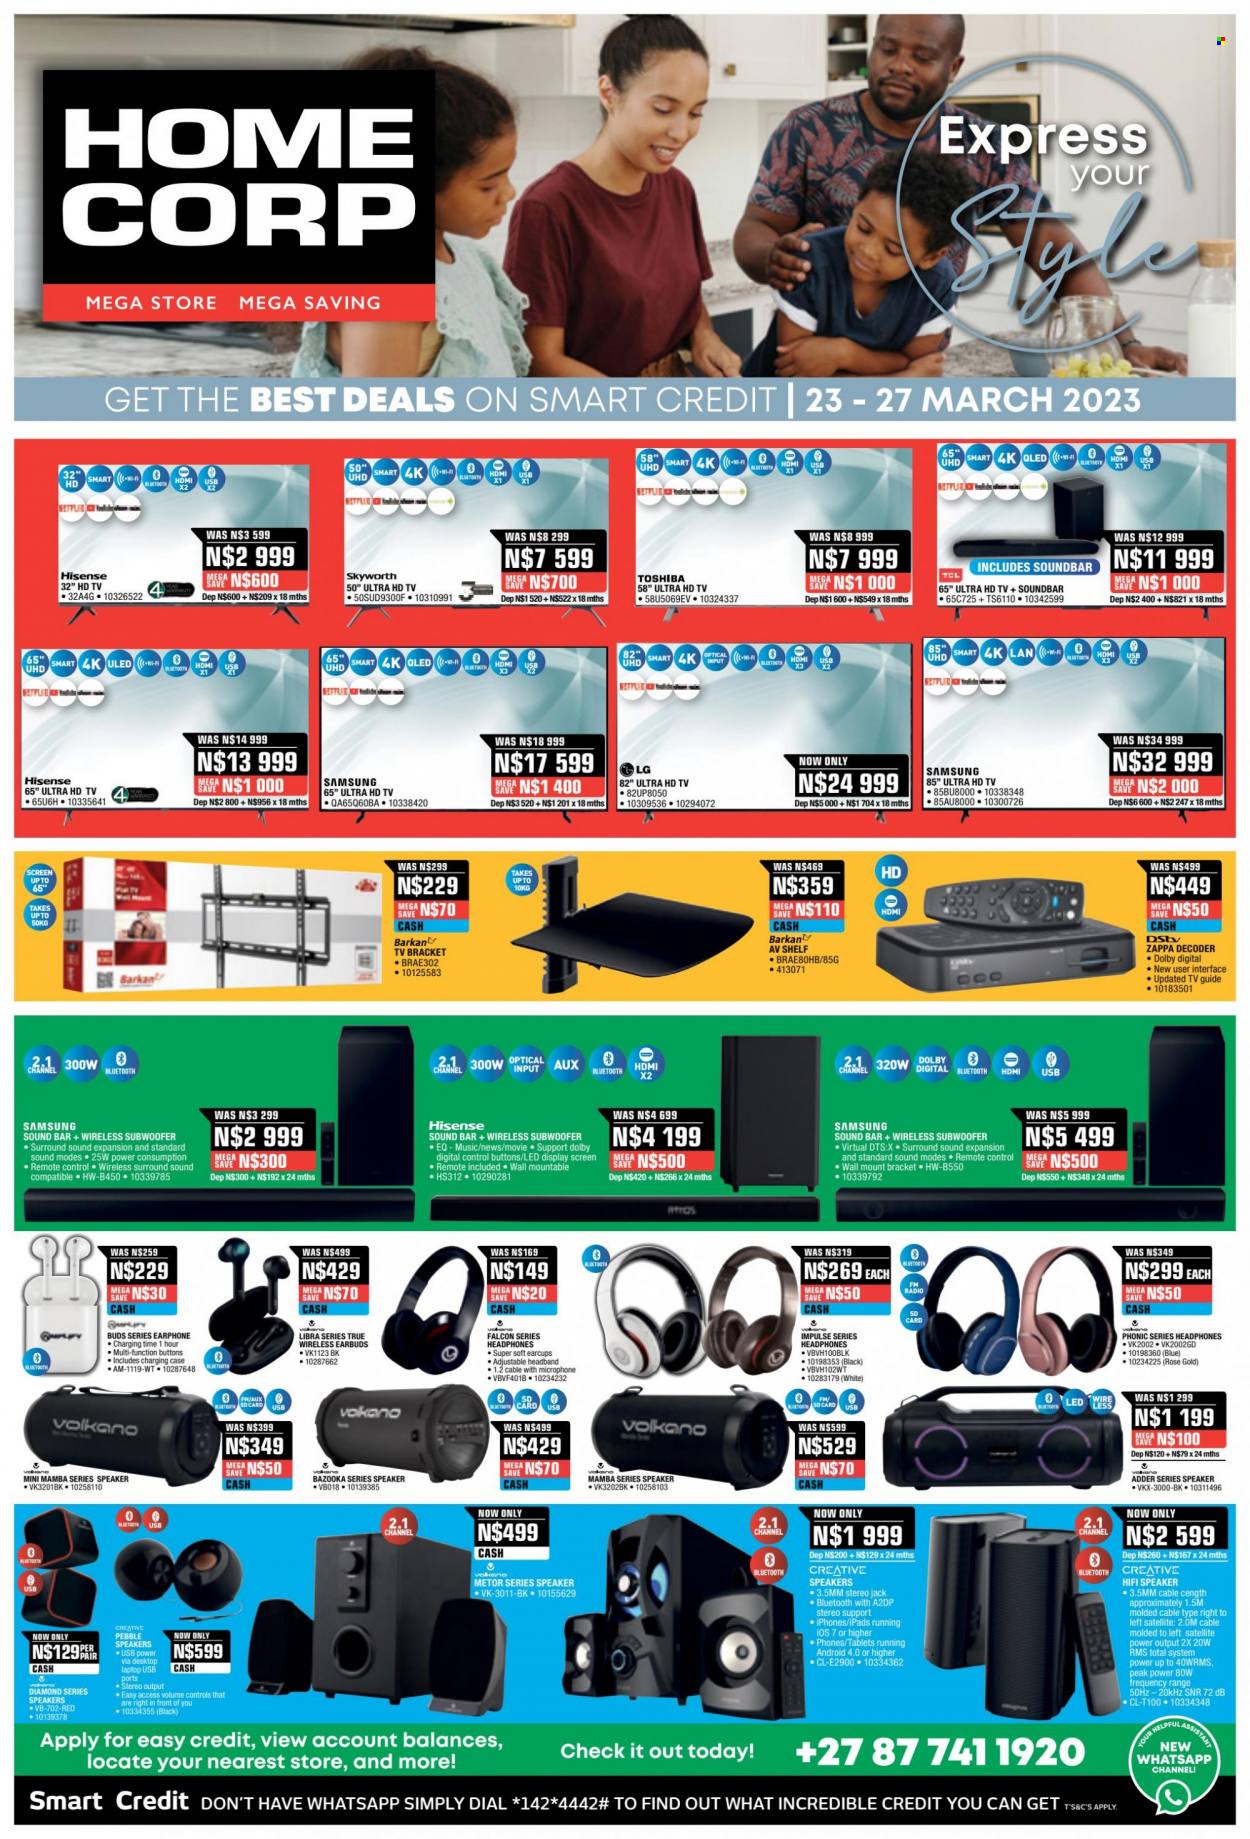 thumbnail - HomeCorp catalogue  - 23/03/2023 - 27/03/2023 - Sales products - shelves, laptop, LG, Samsung, TCL, Toshiba, UHD TV, ultra hd, HDTV, Hisense, Skyworth, radio, decoder, speaker, subwoofer, wireless subwoofer, sound bar, headphones, earbuds, Volkano, earphone, remote control, tv bracket, wall mount bracket. Page 5.